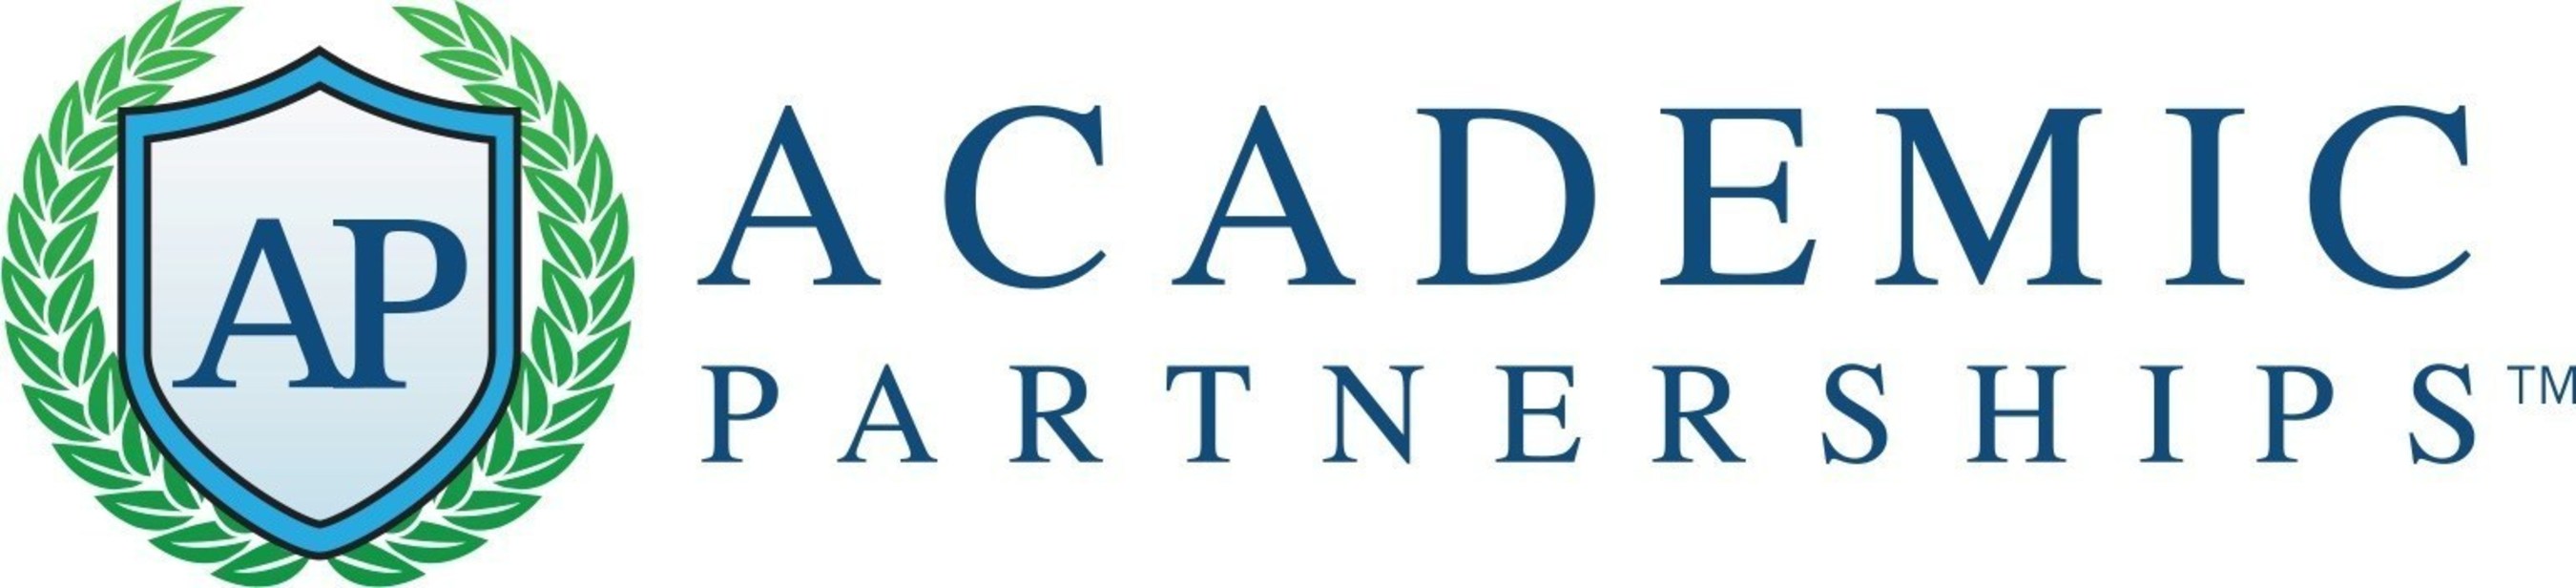 Academic Partnership Logo 